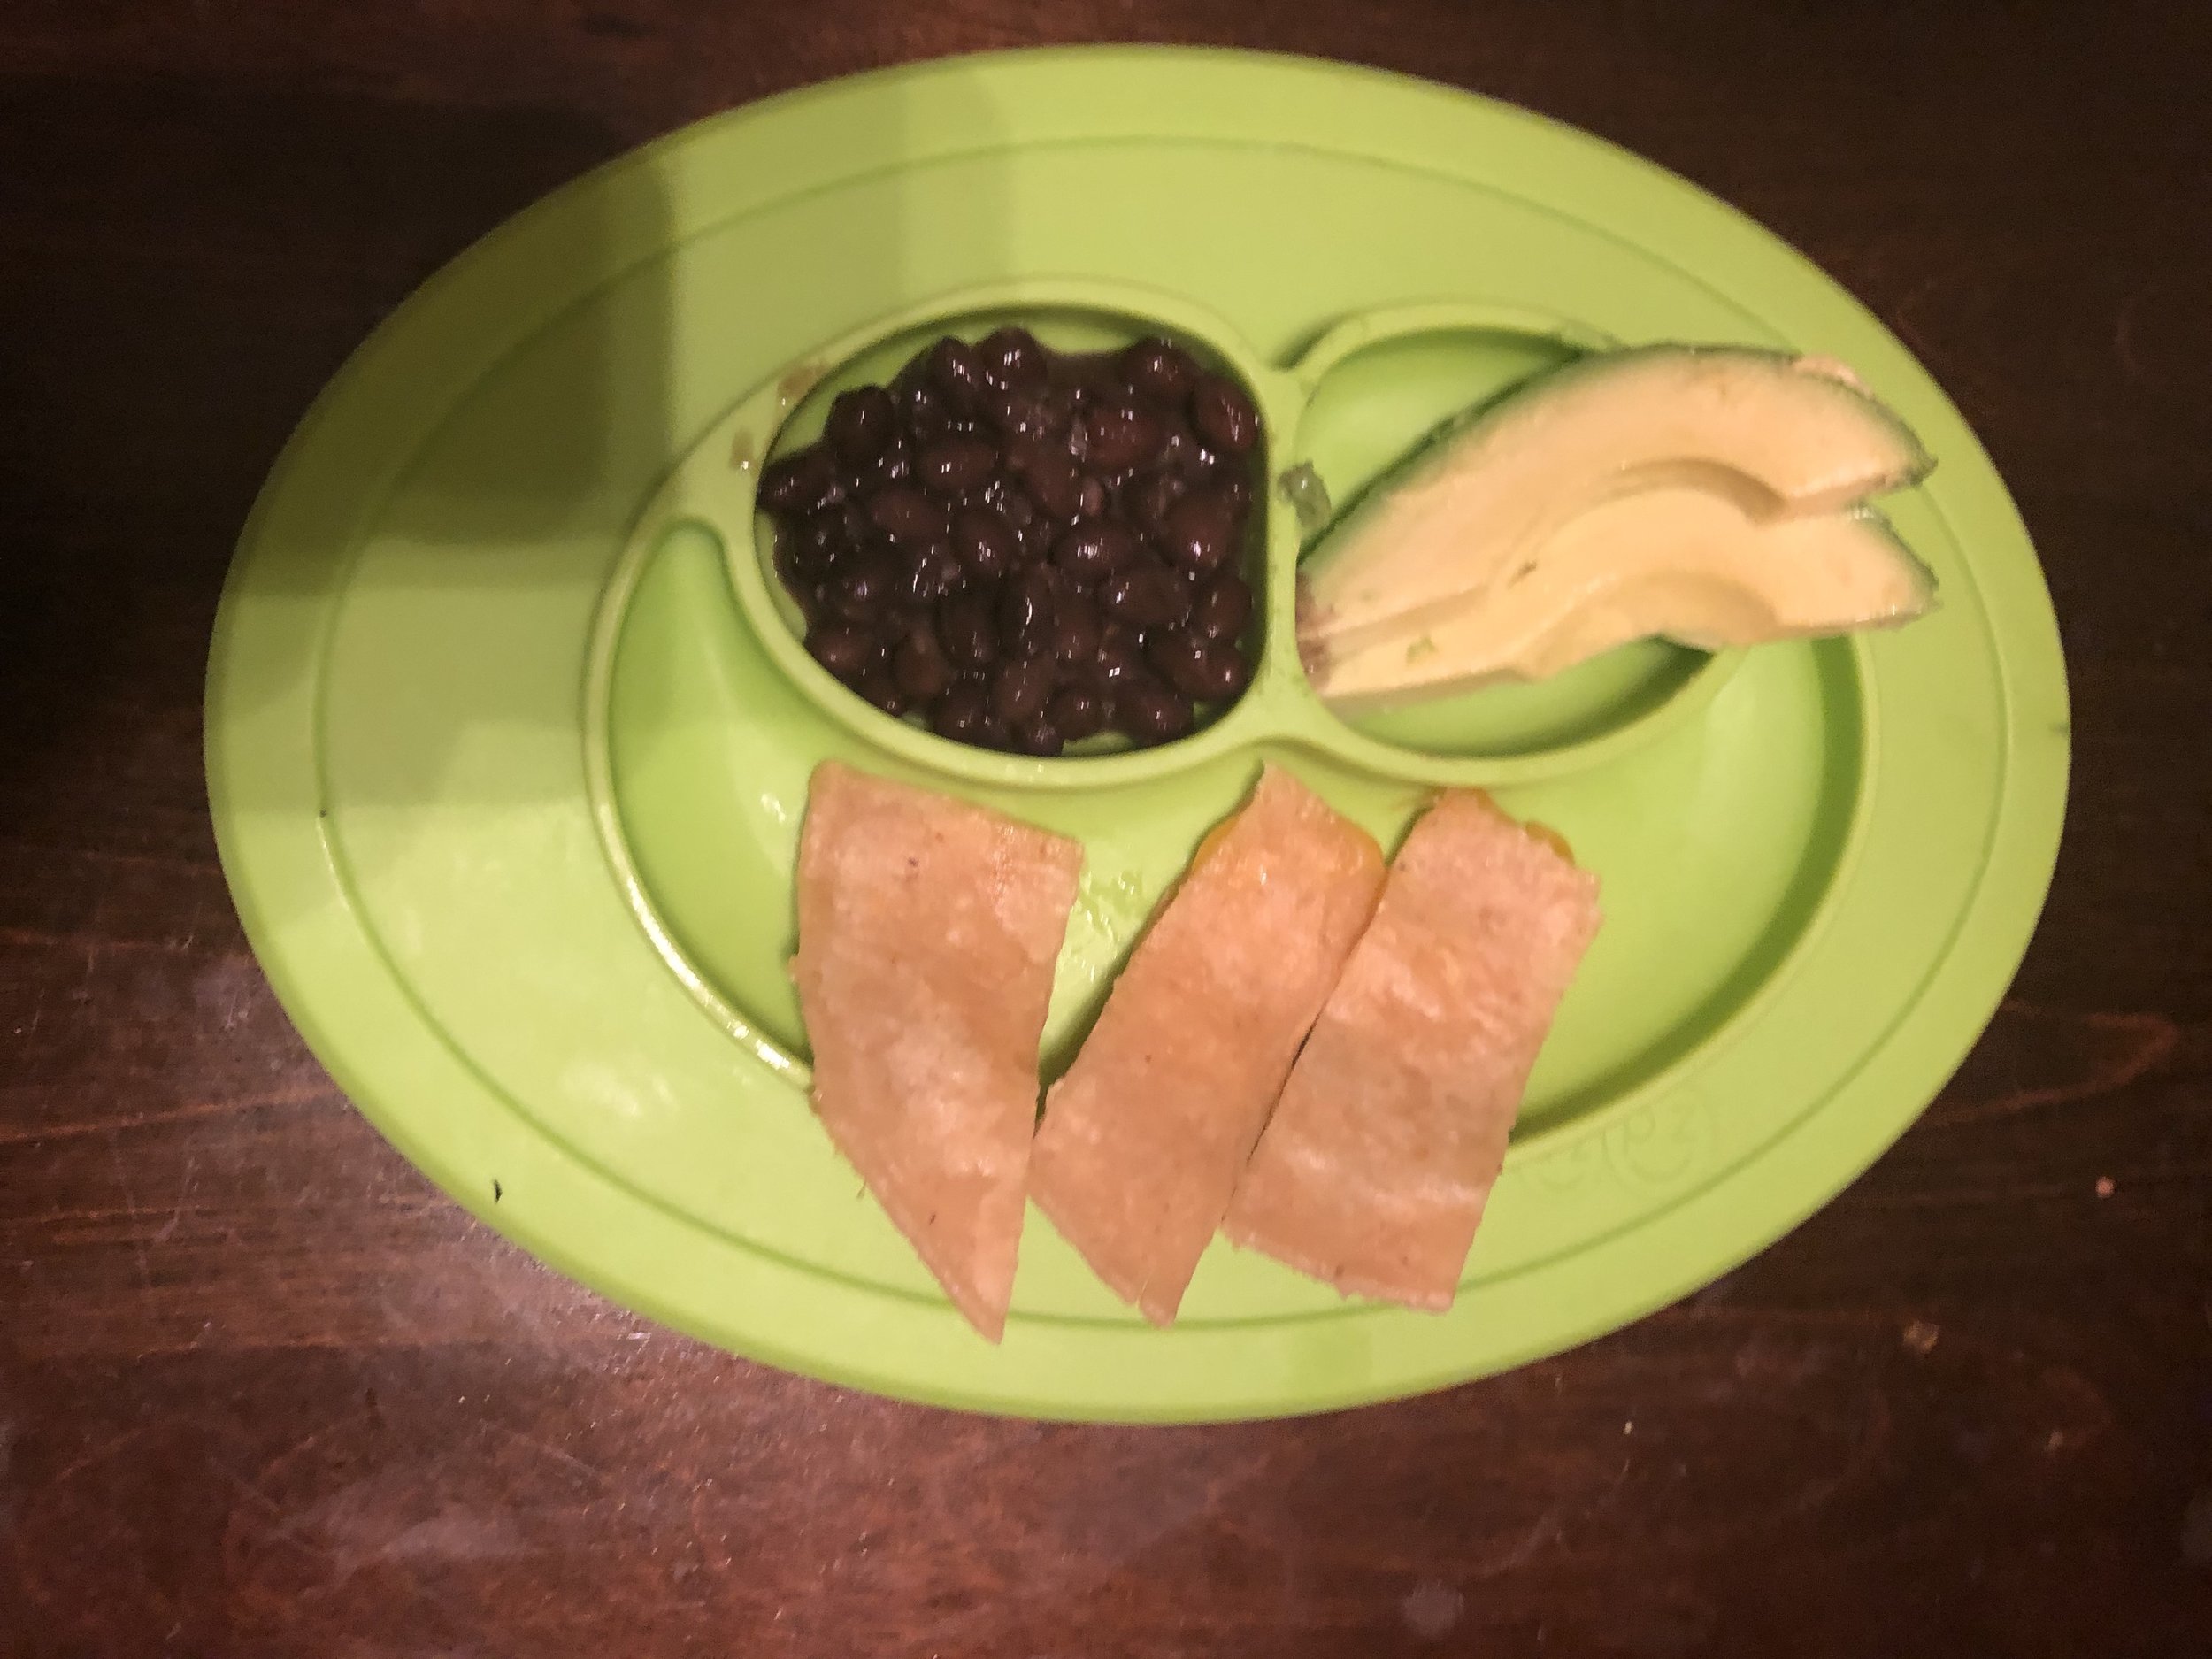 quesadillas, beans and avocado